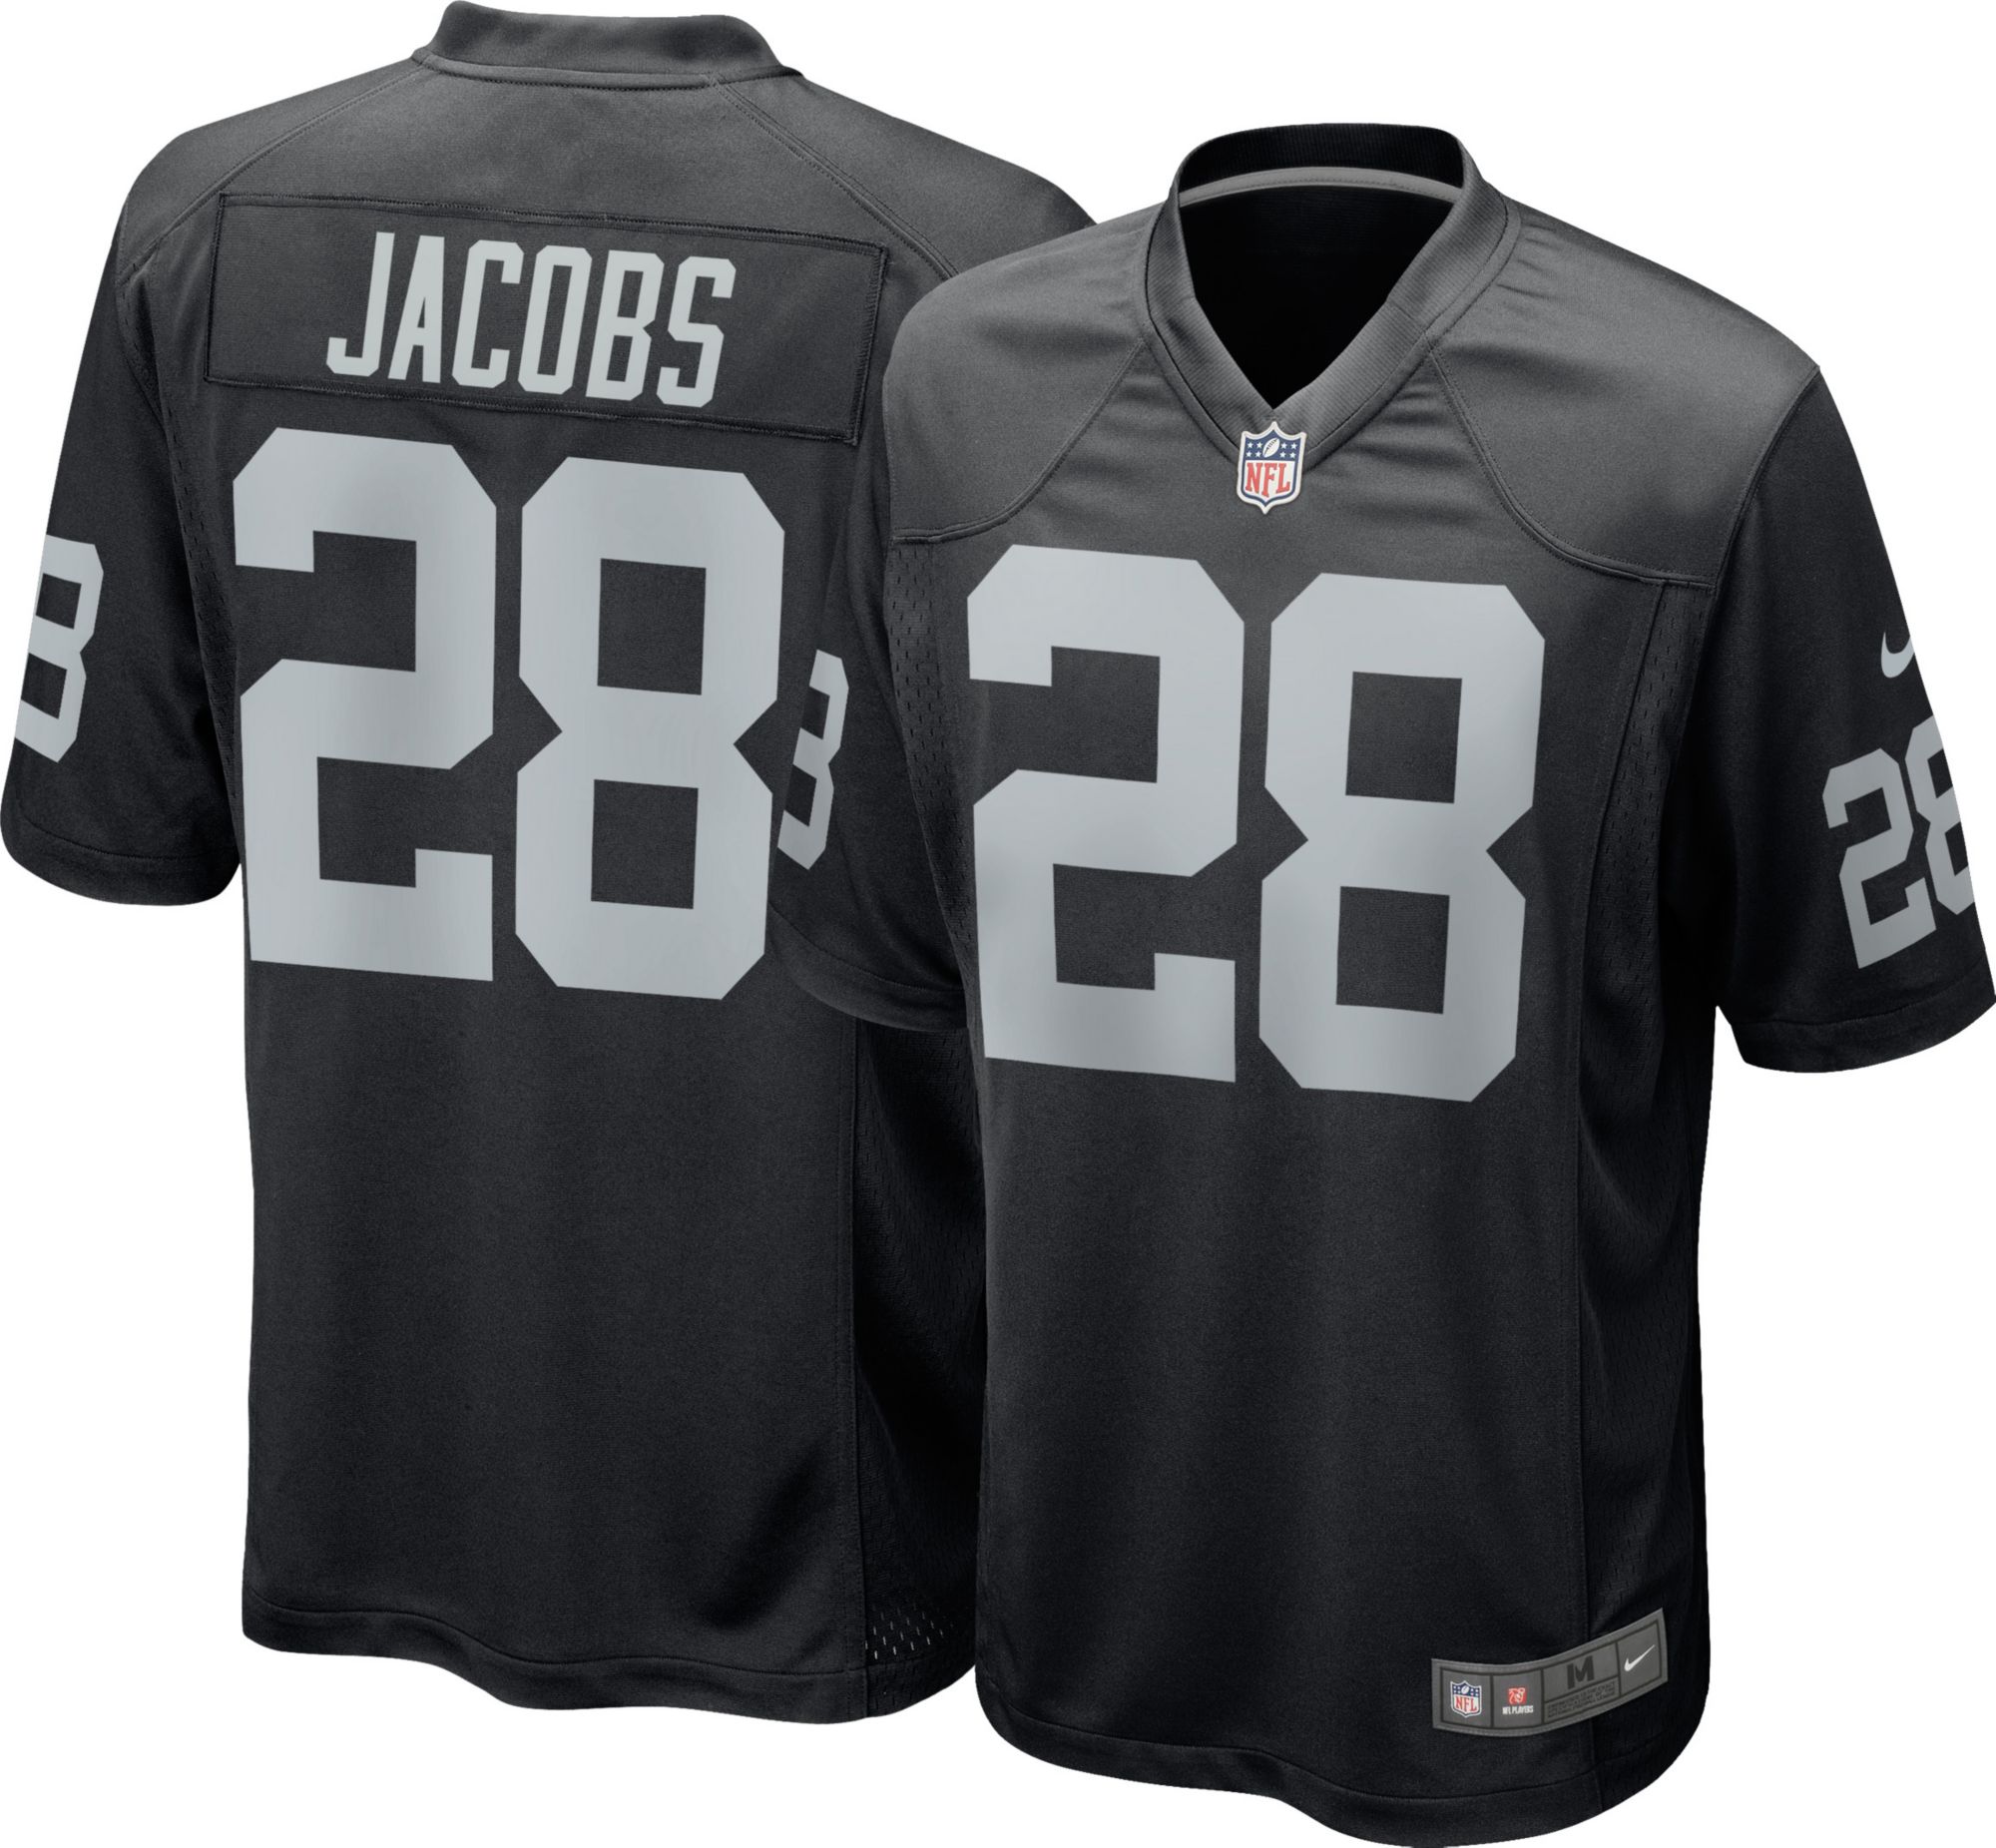 raiders 28 jacobs jersey